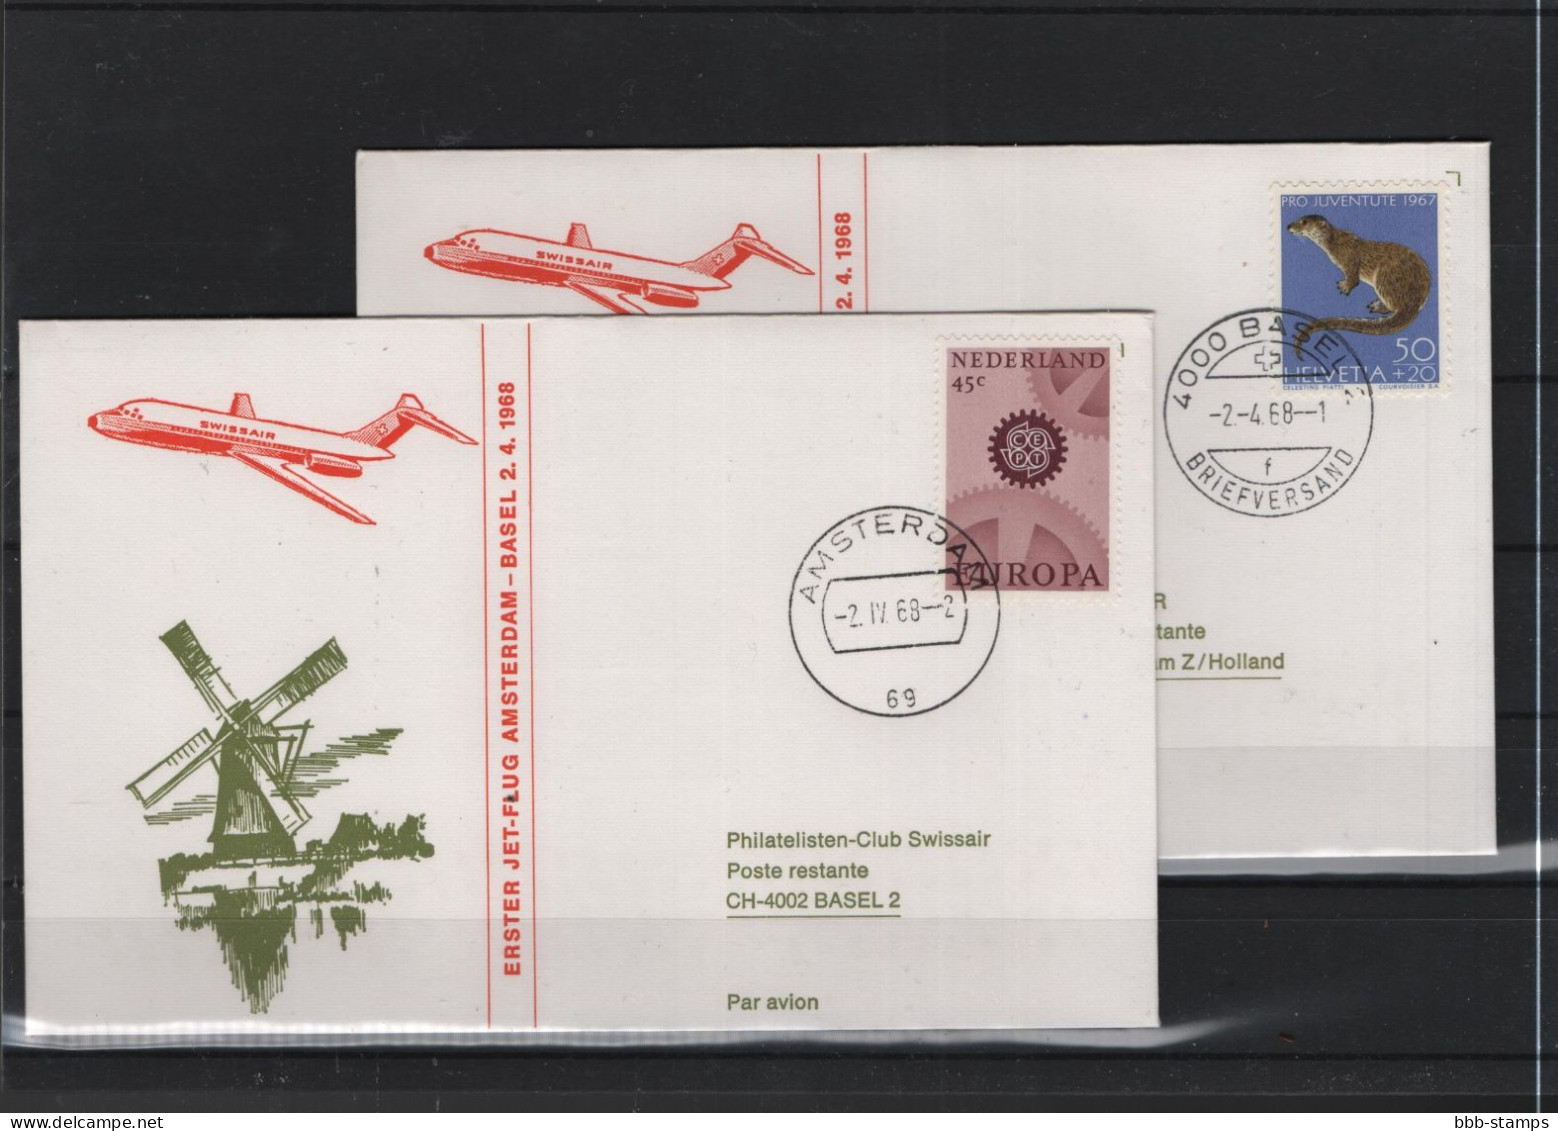 Schweiz Air Mail Swissair  FFC  2.4.1968 Basel - Amsterdam VV - Primeros Vuelos